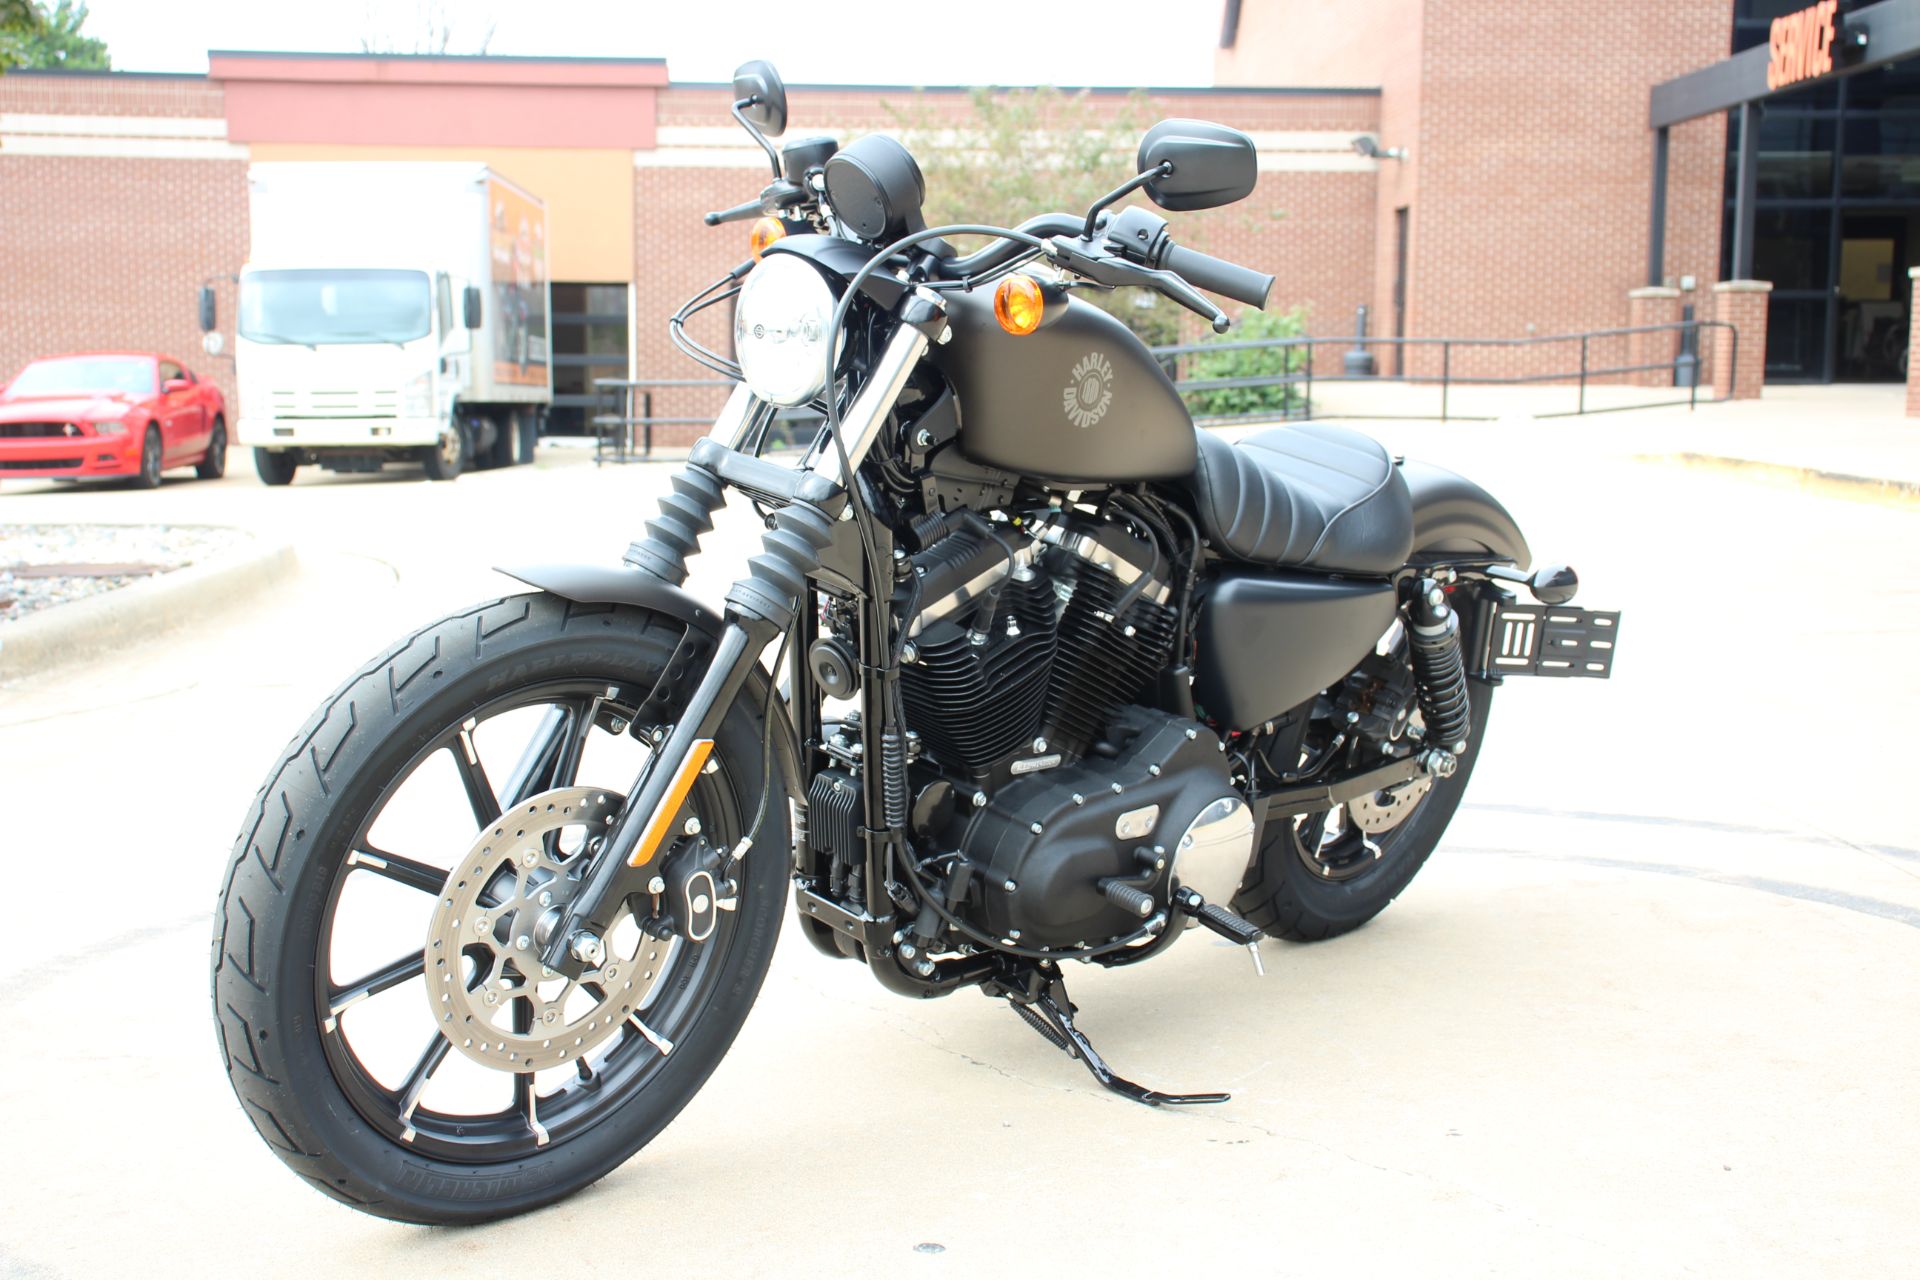 2022 Harley-Davidson Iron 883™ in Flint, Michigan - Photo 4